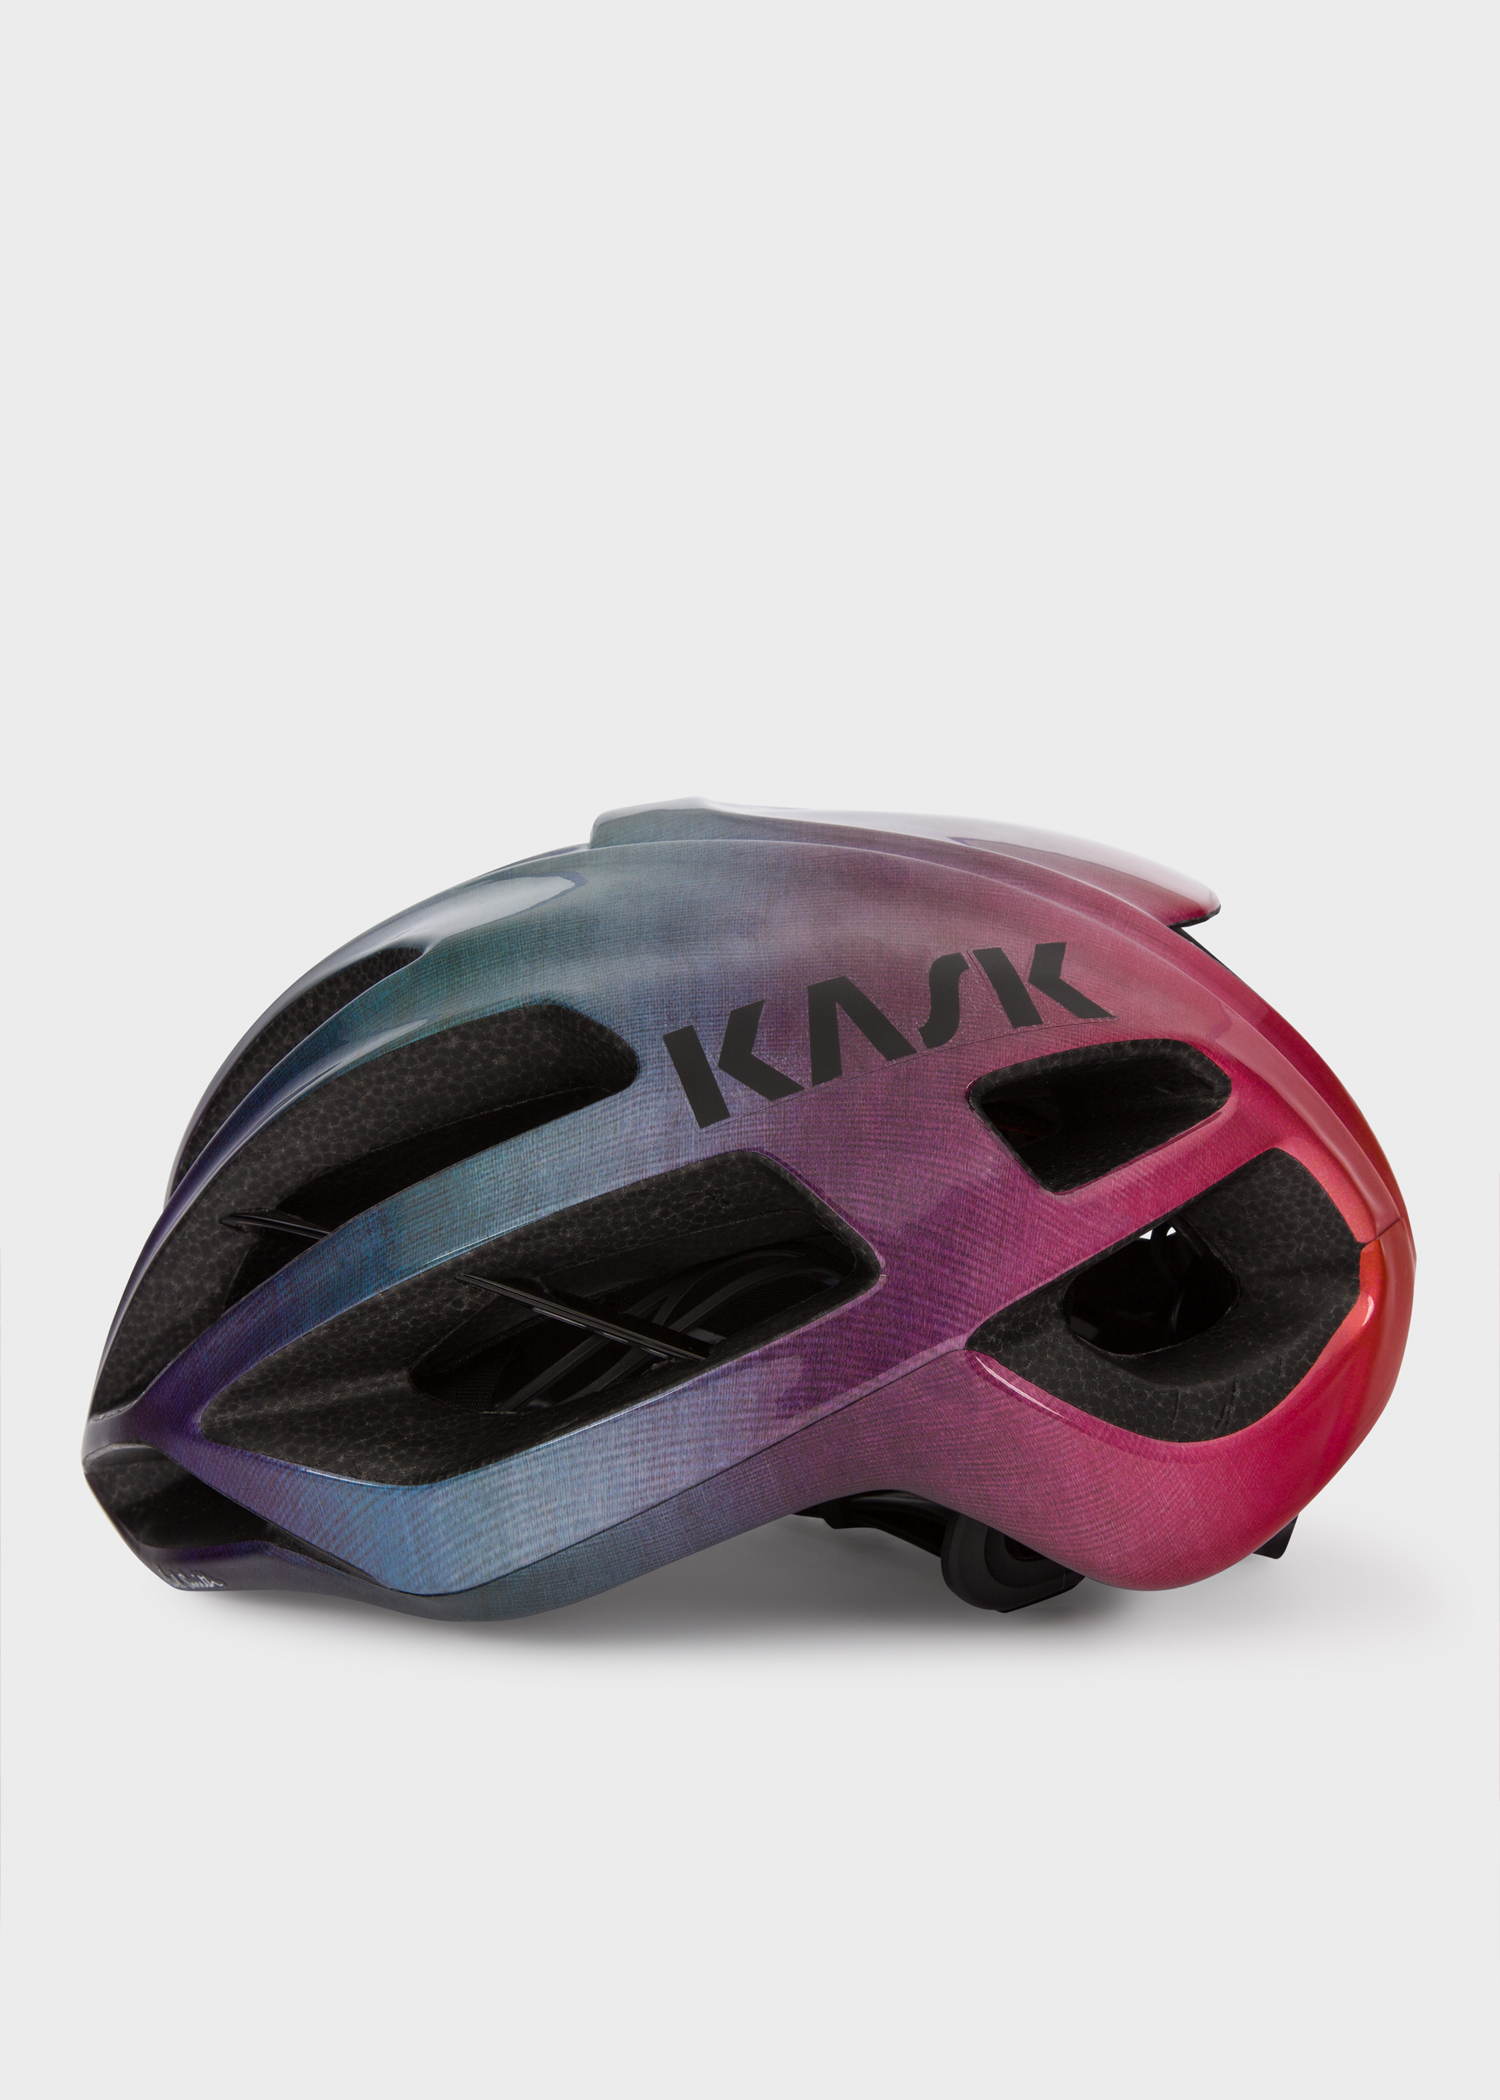 Paul + Kask 'Rainbow Gradient' USA Spec Cycling Helmet